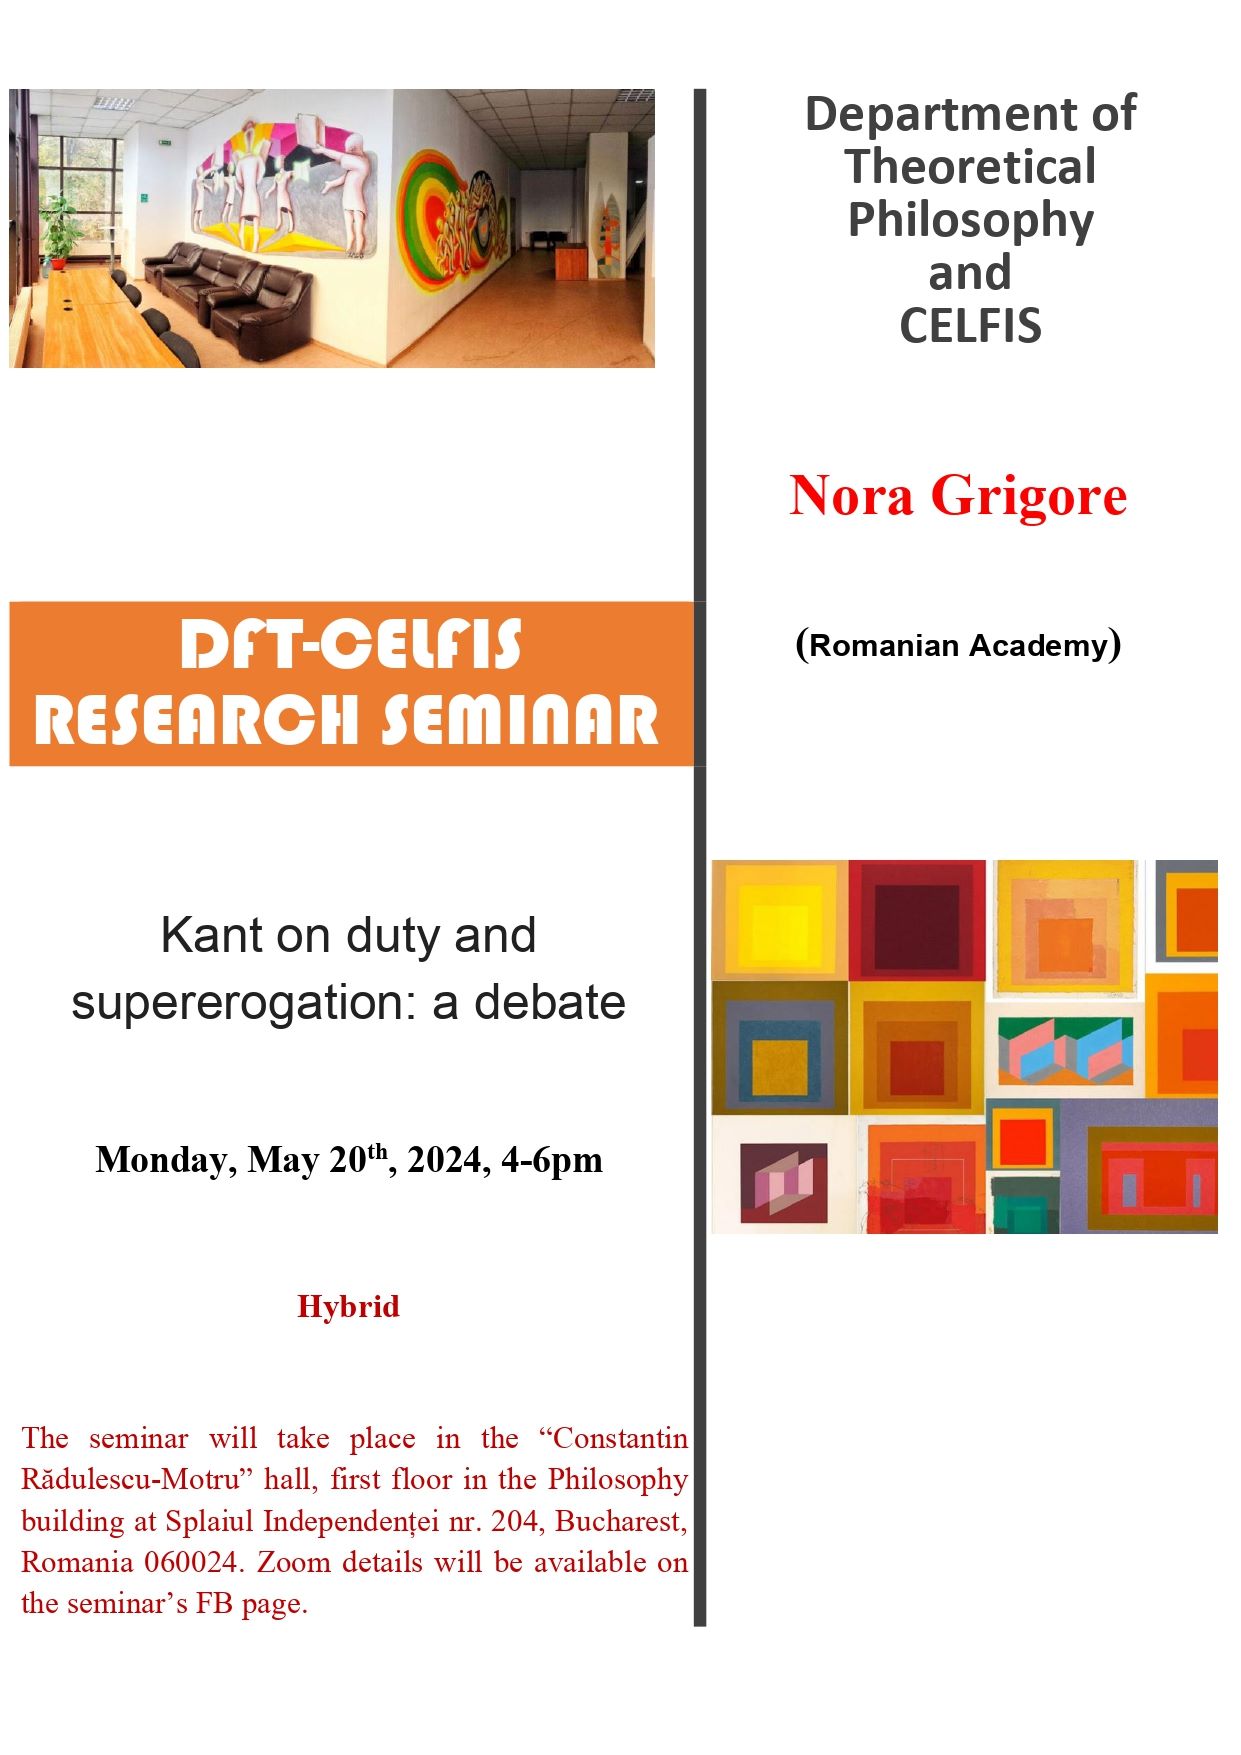 DfT-CELFIS Seminar Nora Grigore - May 20 2024.jpg